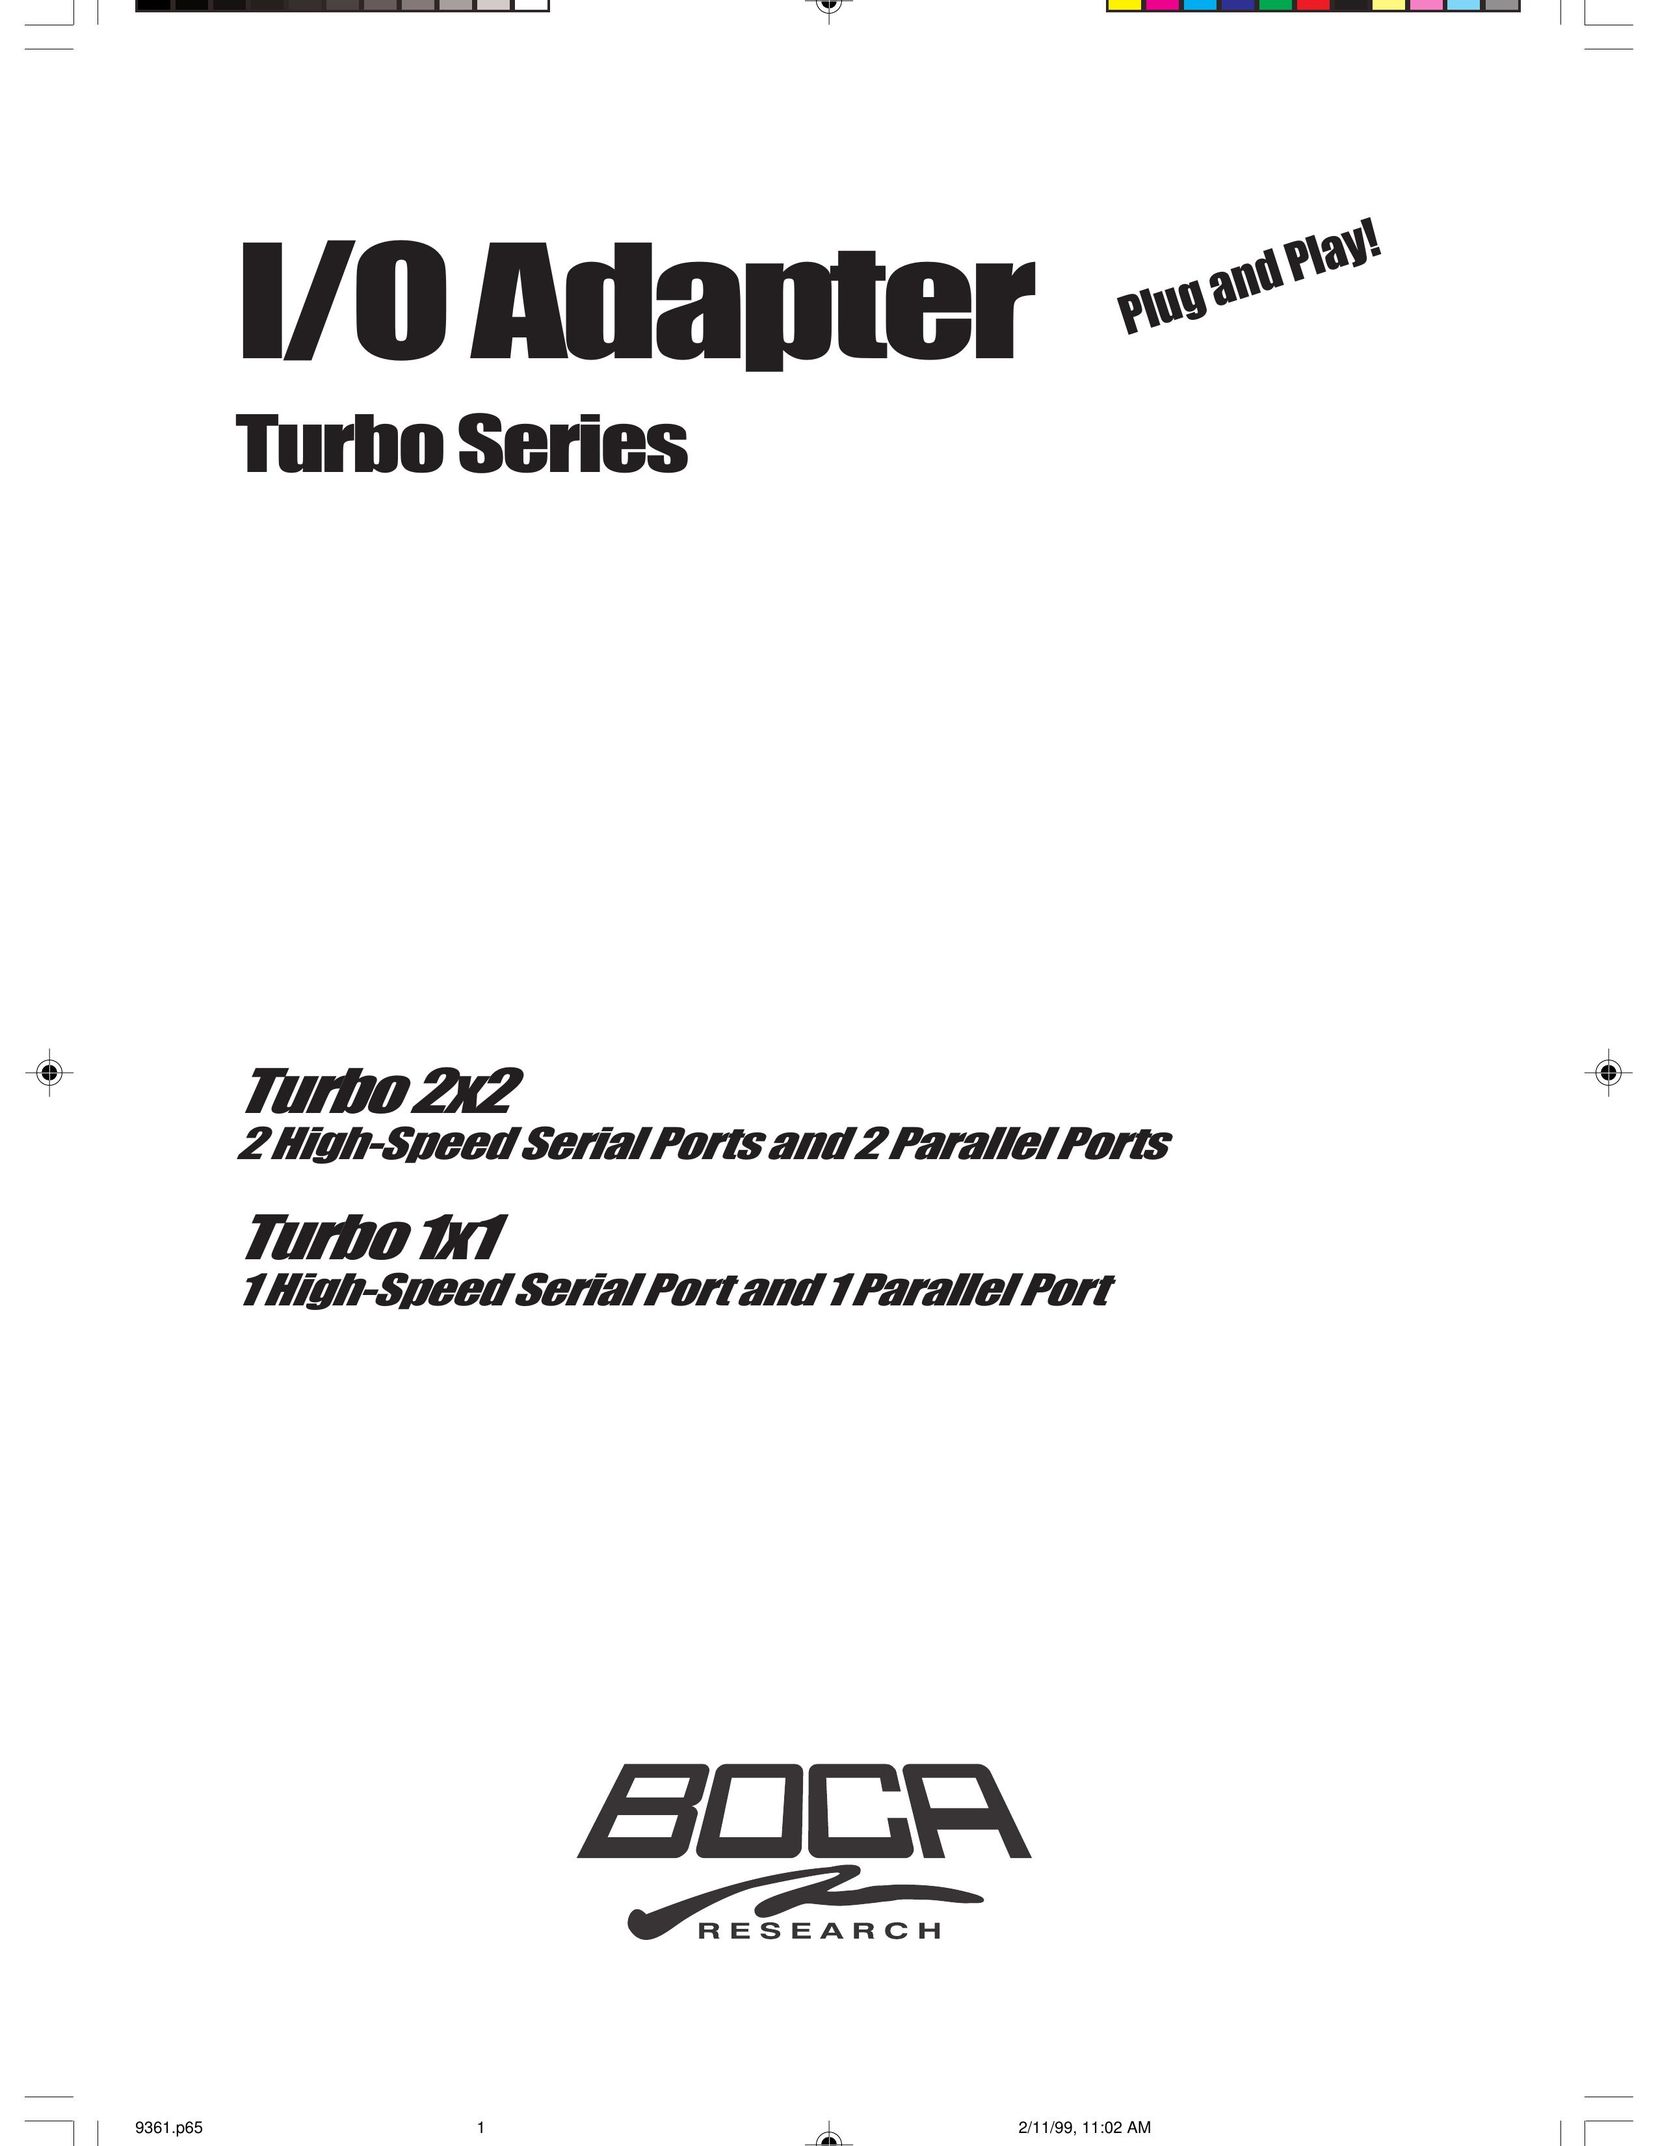 Boca Research Turbo1x1 Network Card User Manual